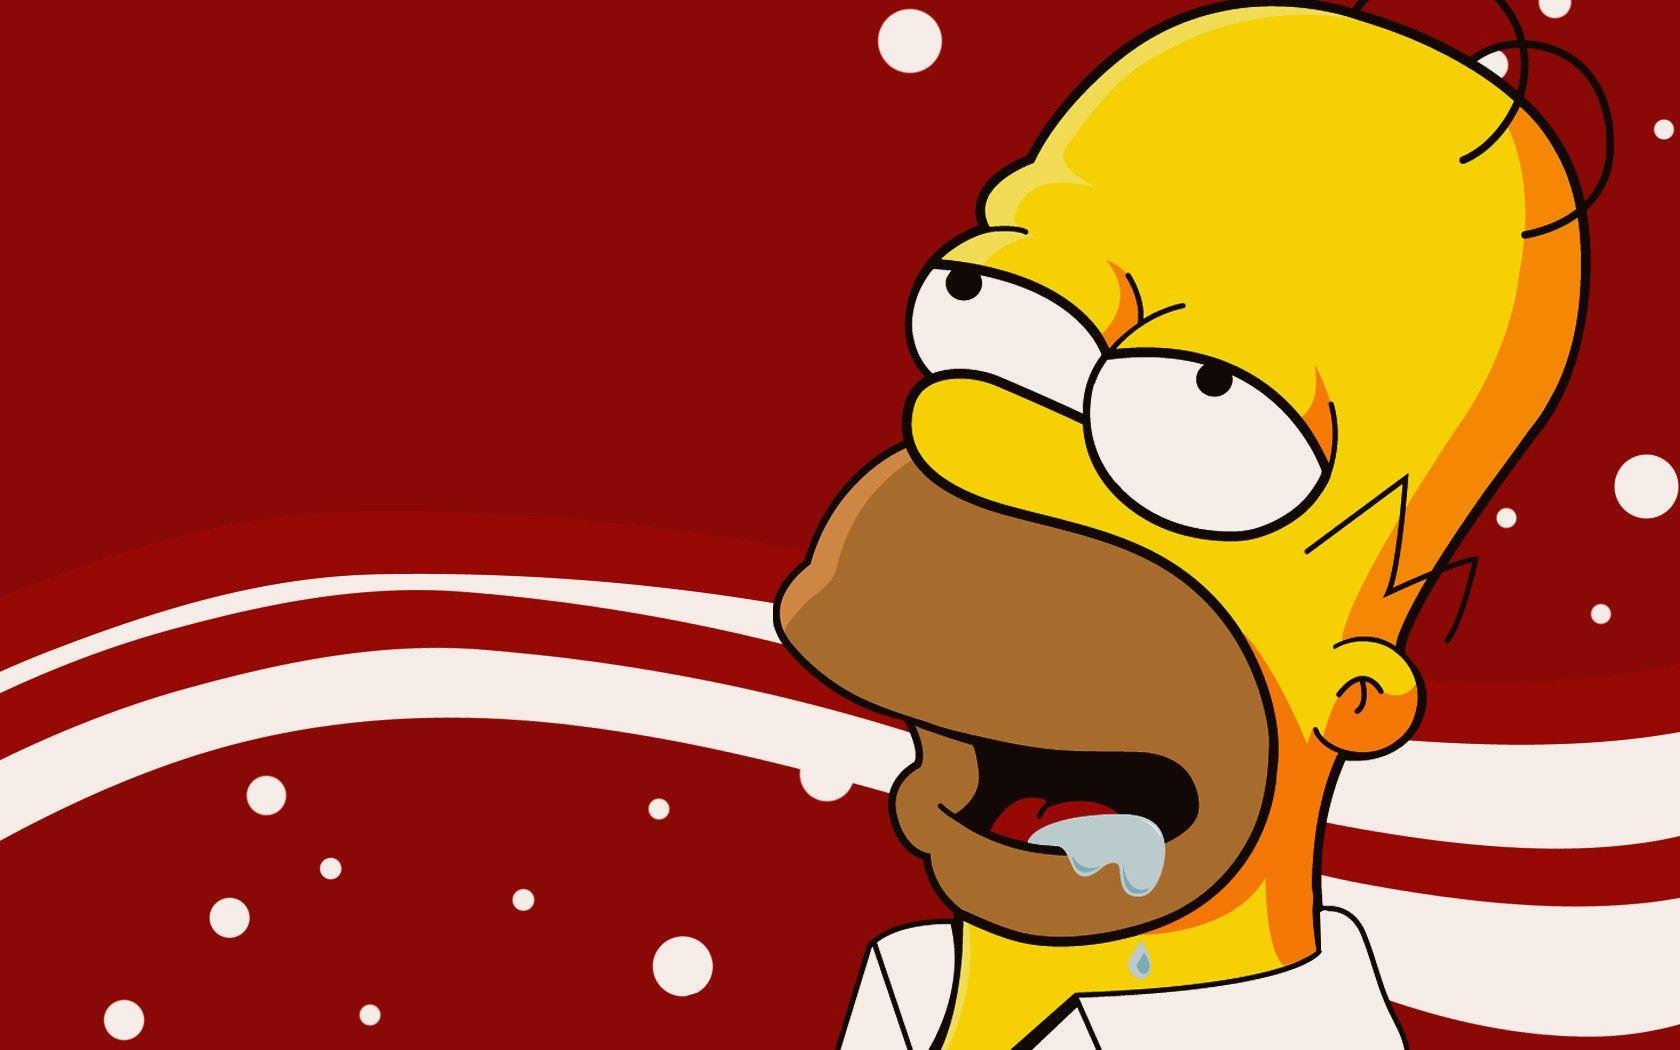 Sad Bart Simpson Wallpapers - Top Free Sad Bart Simpson Backgrounds